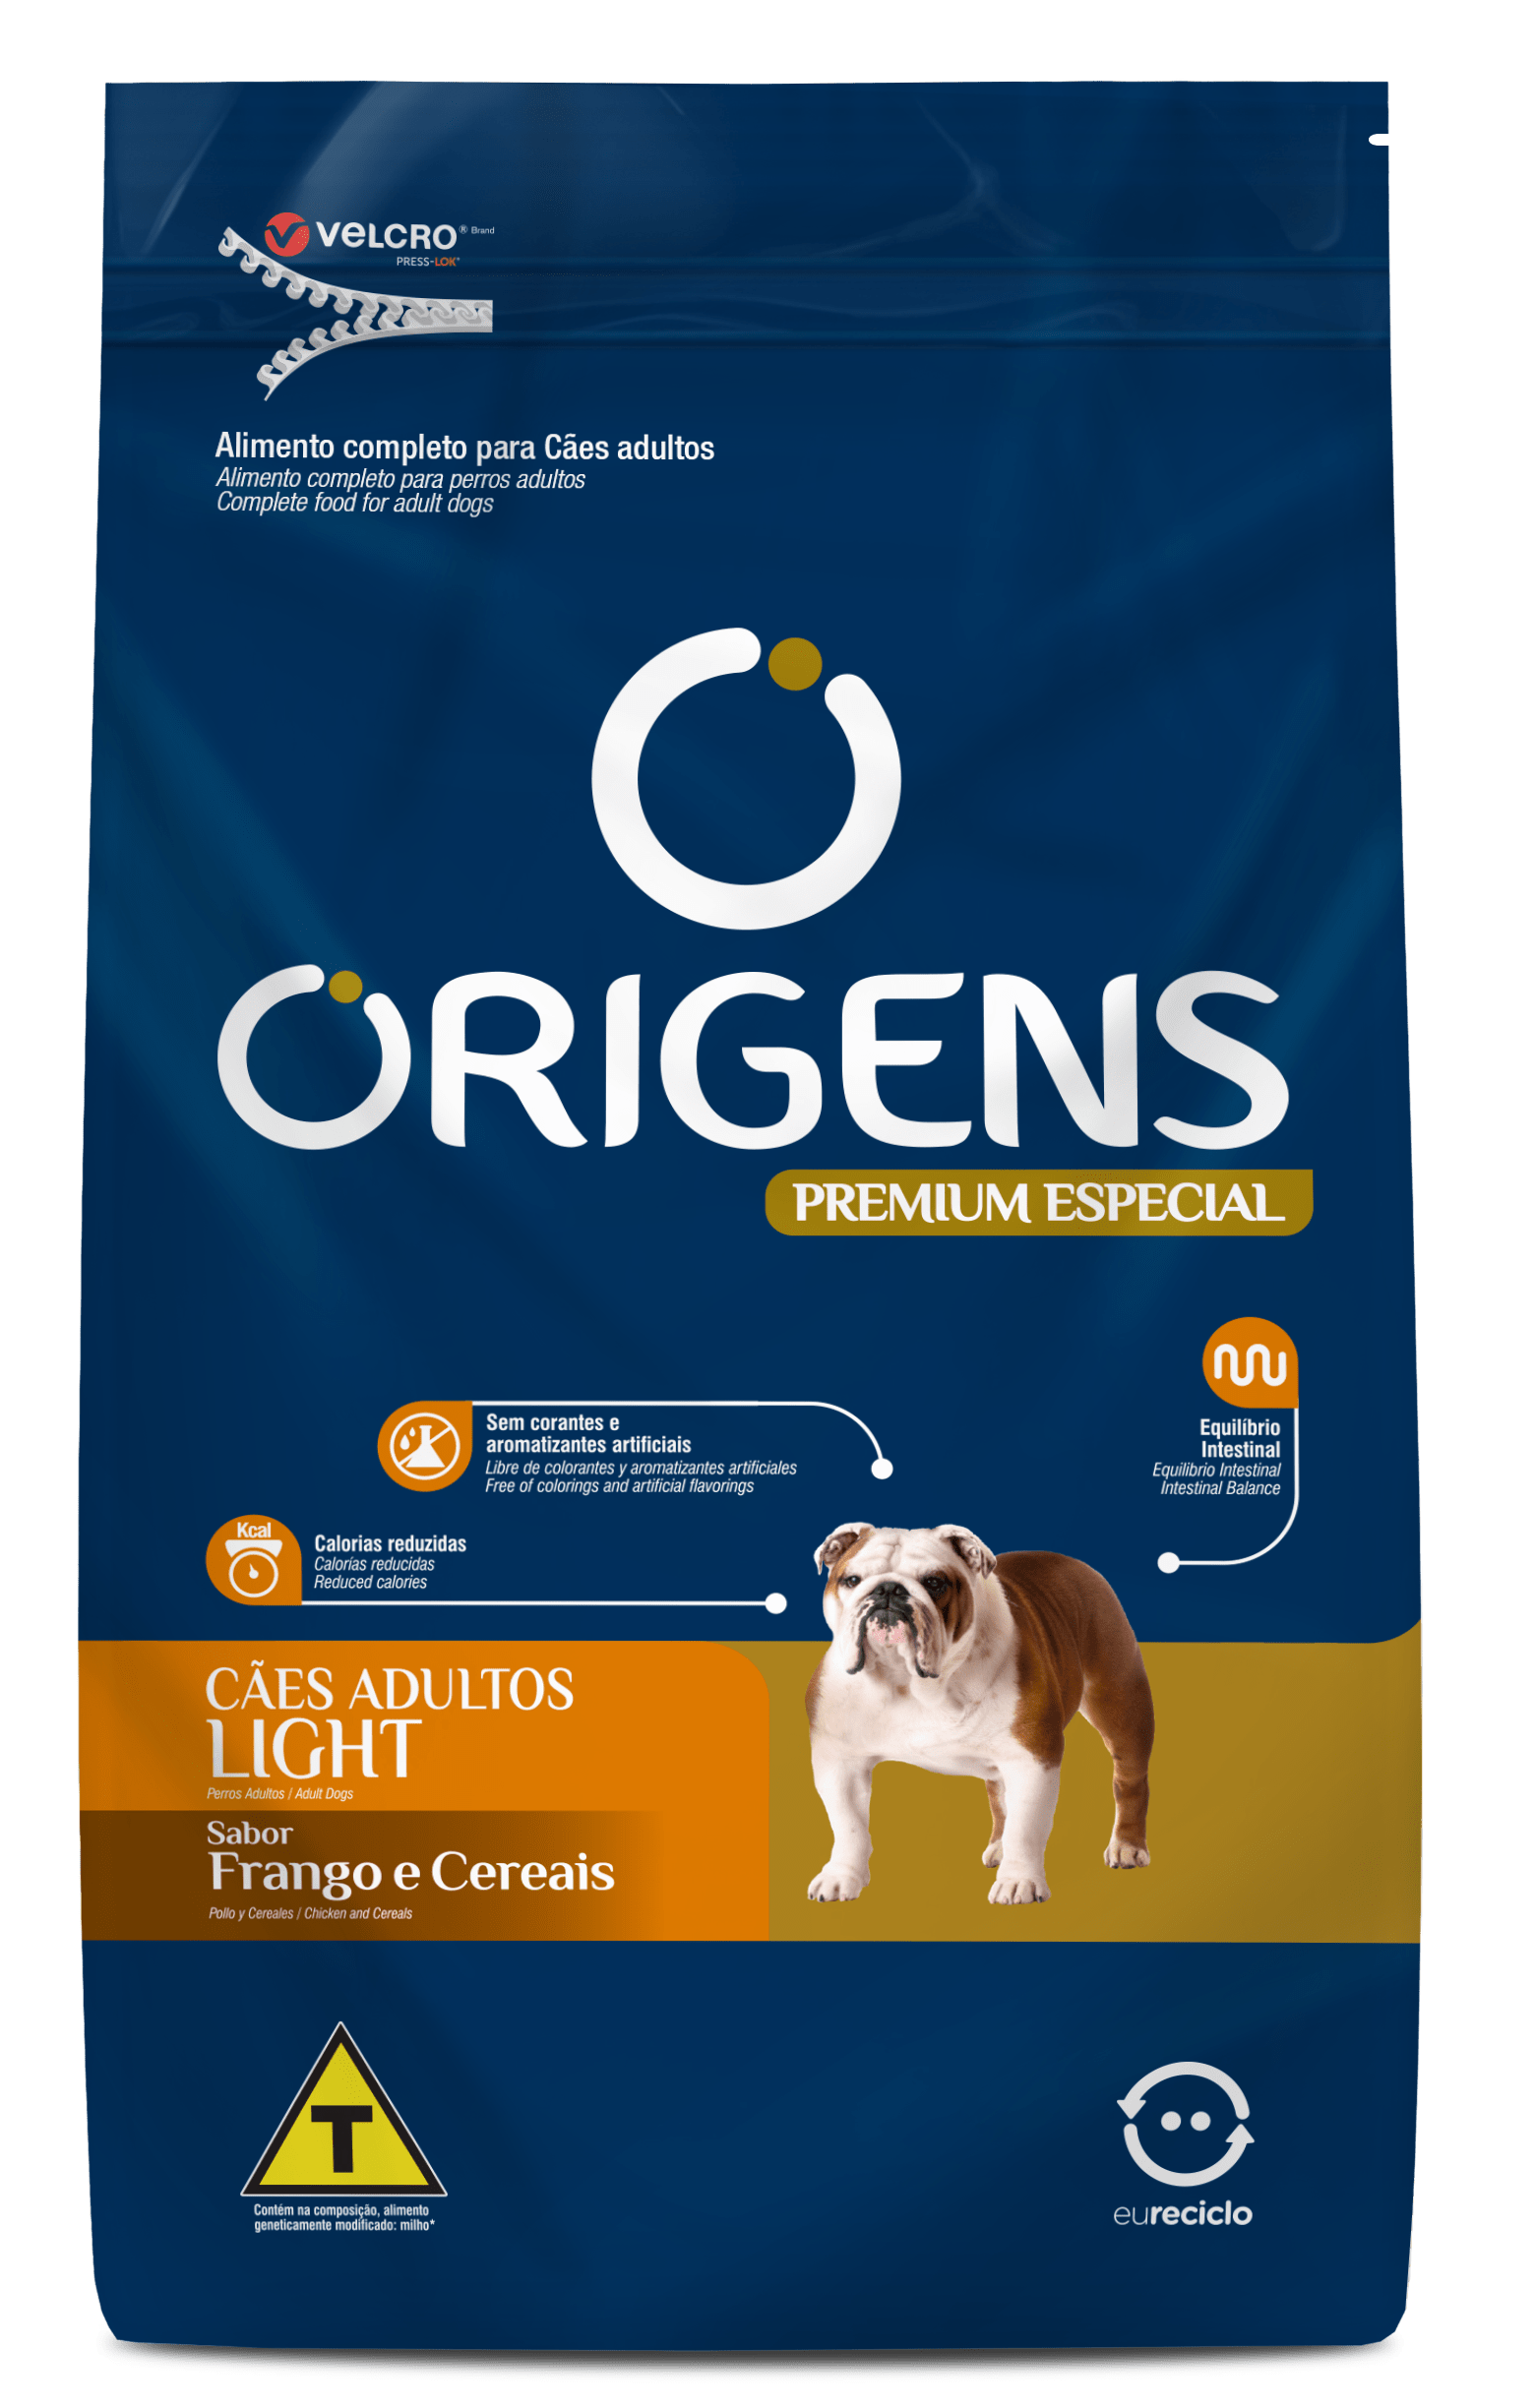 Origens Premium Especial Adult Dogs Light Chicken and Cereals Flavor